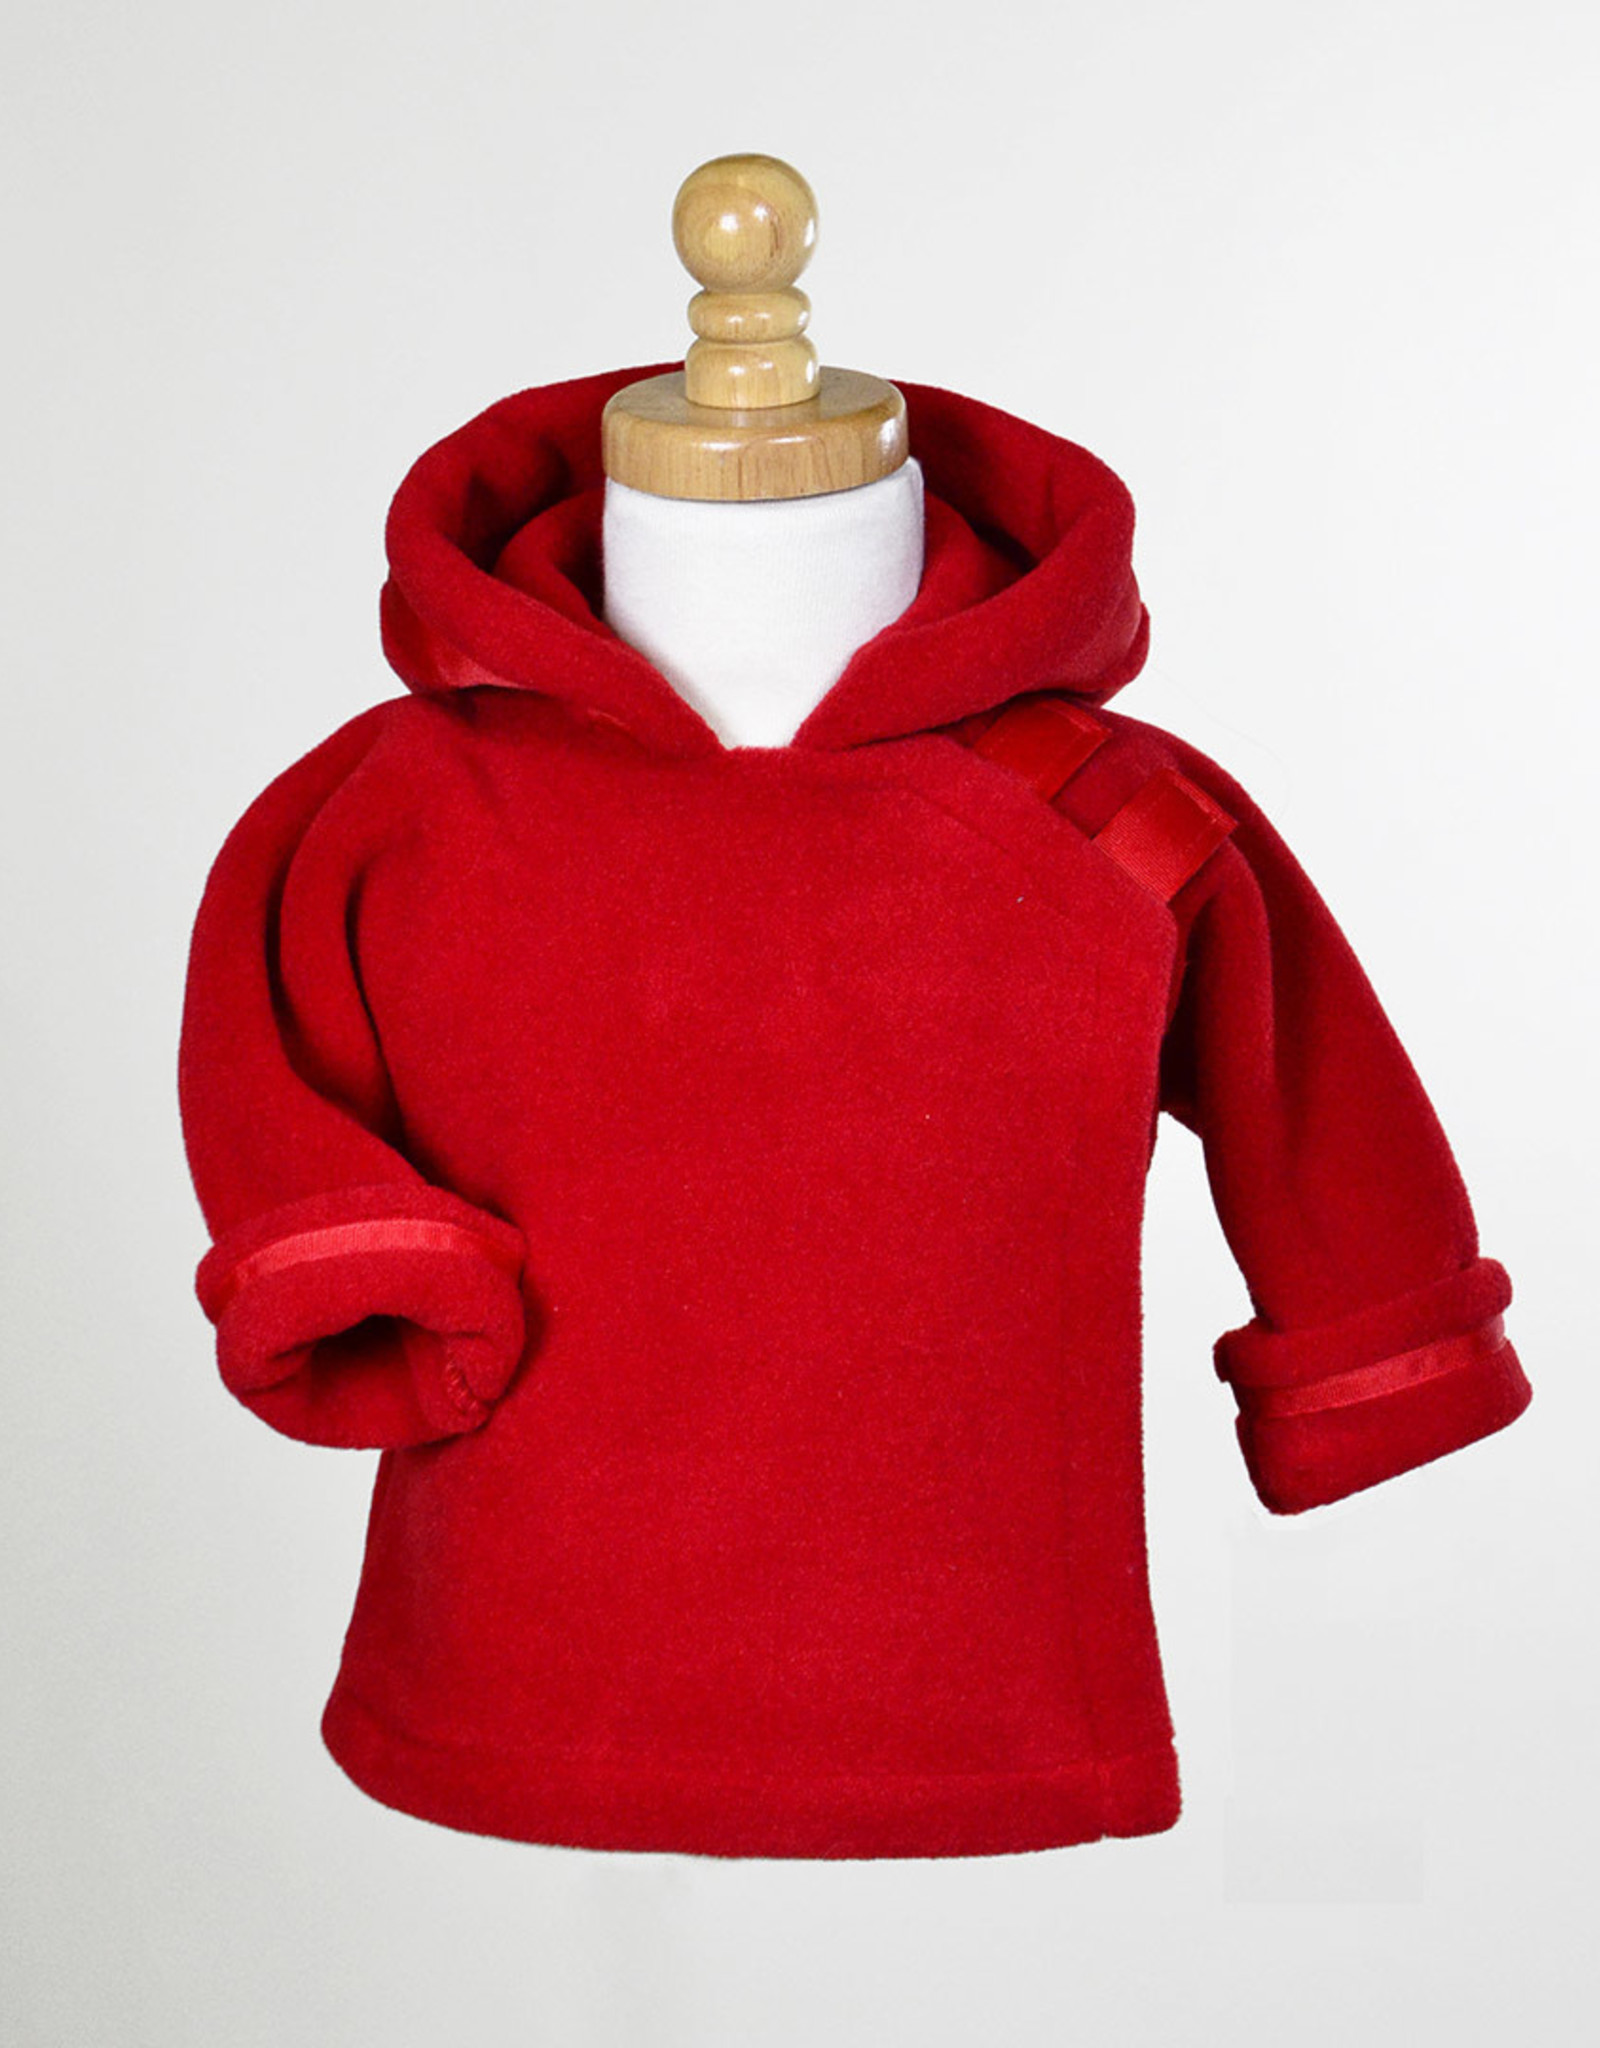 Widgeon Favorite Jacket Red